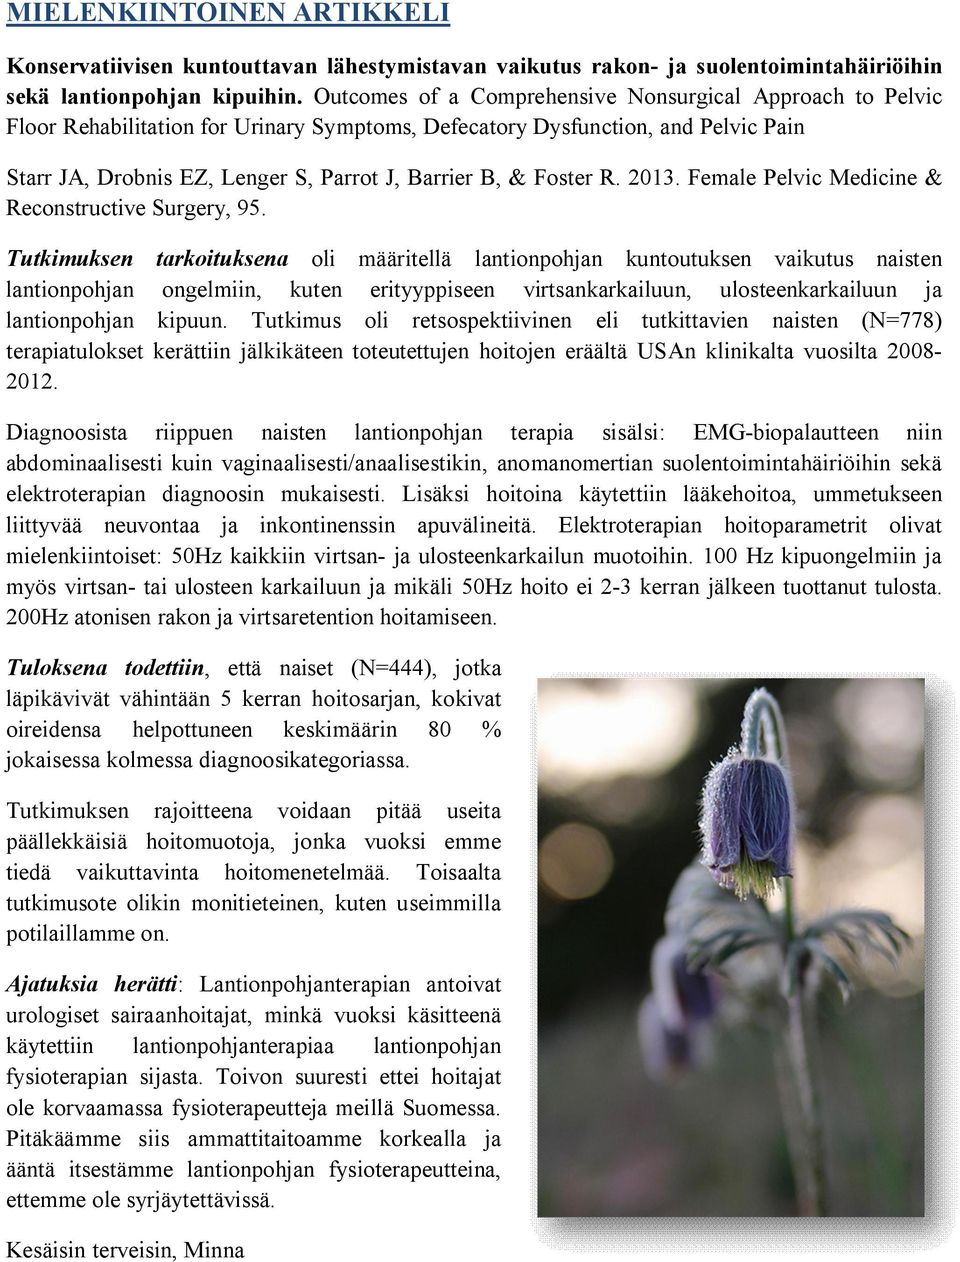 Foster R. 2013. Female Pelvic Medicine & Reconstructive Surgery, 95.